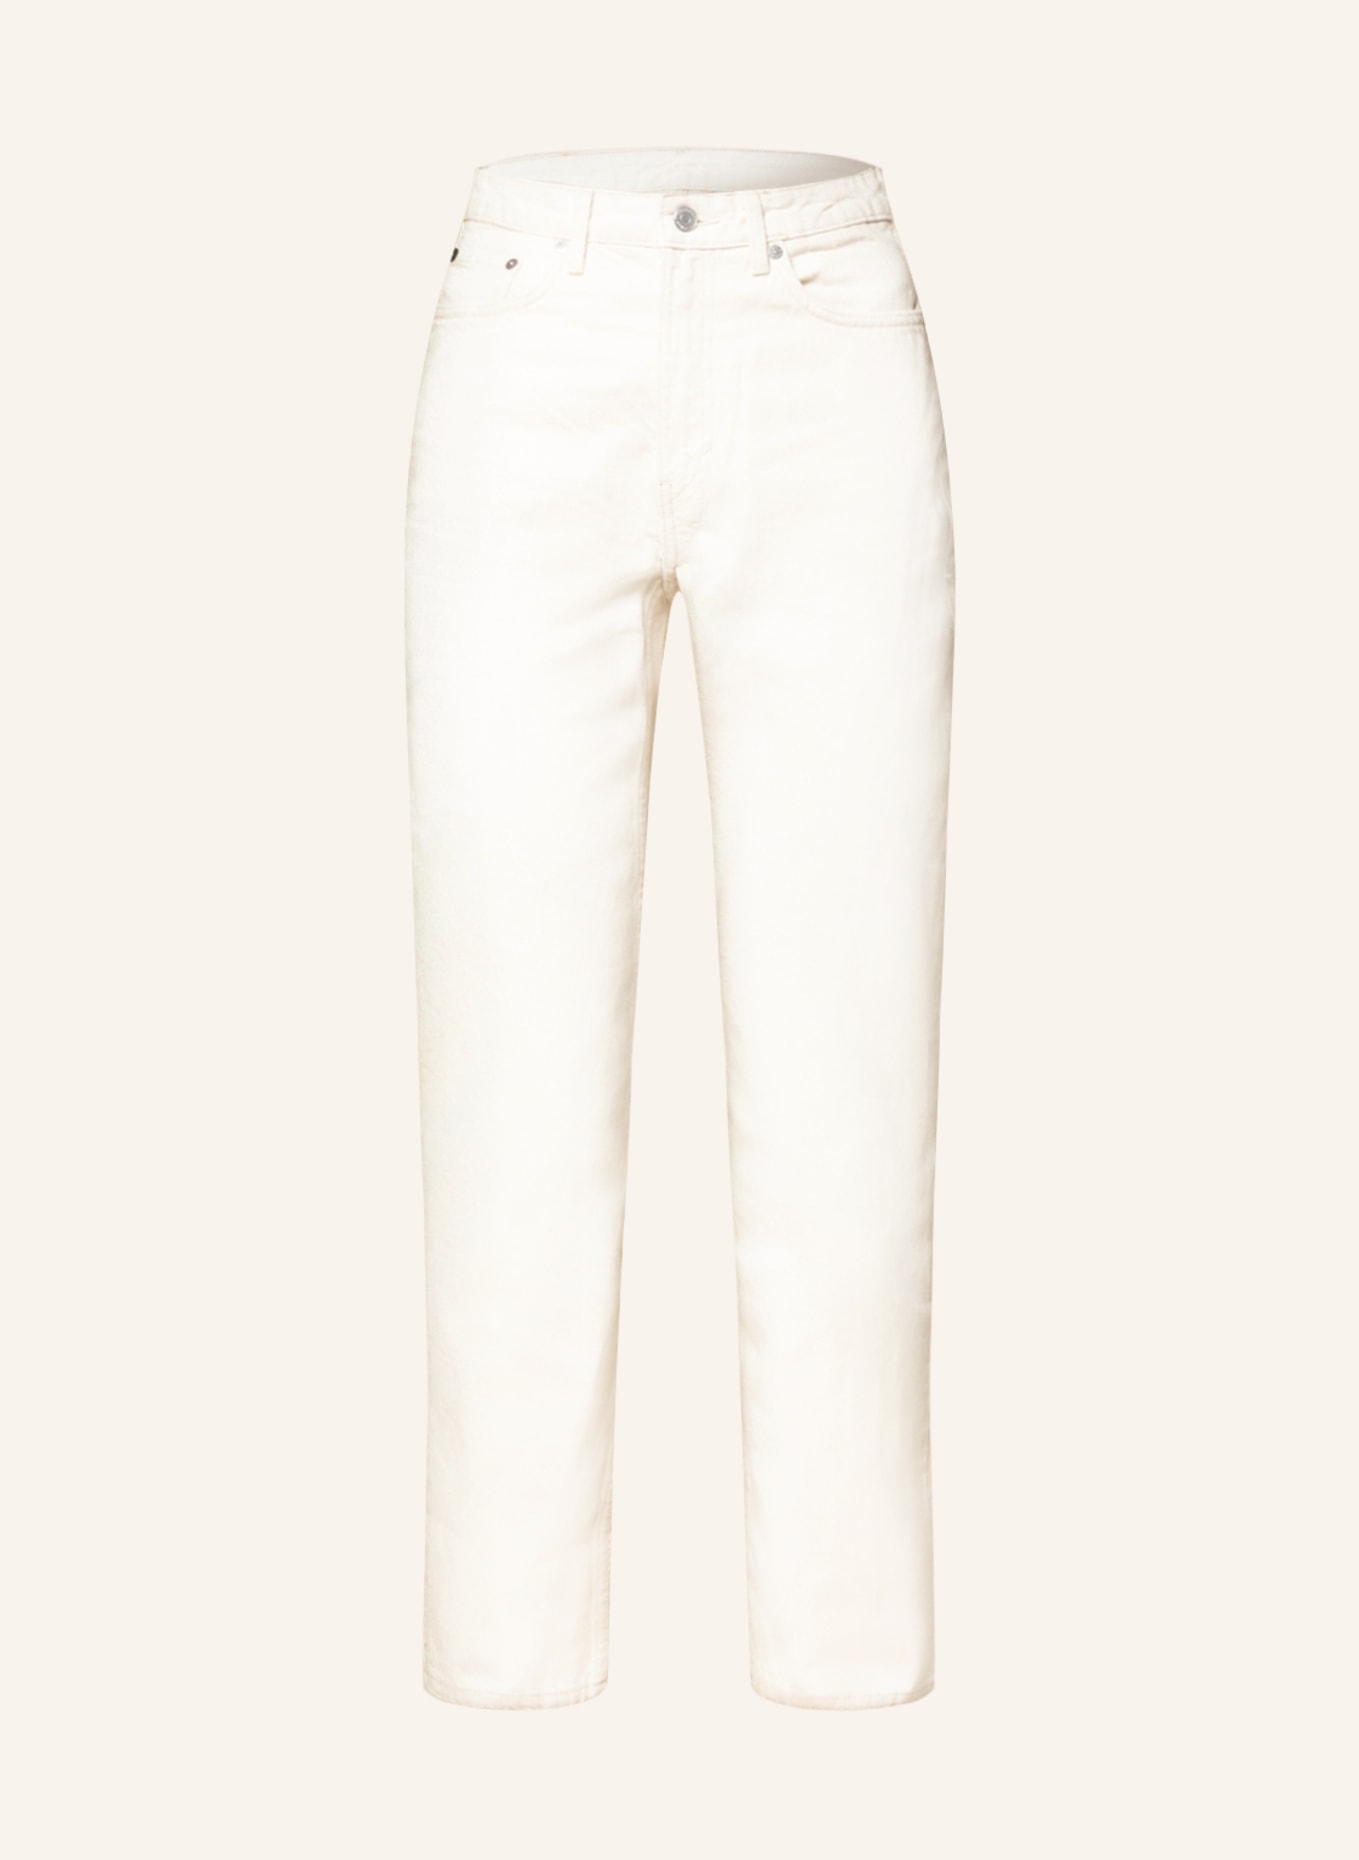 WEEKDAY Straight Jeans VOYAGE , Farbe: 039 Beige dusty Light (Bild 1)